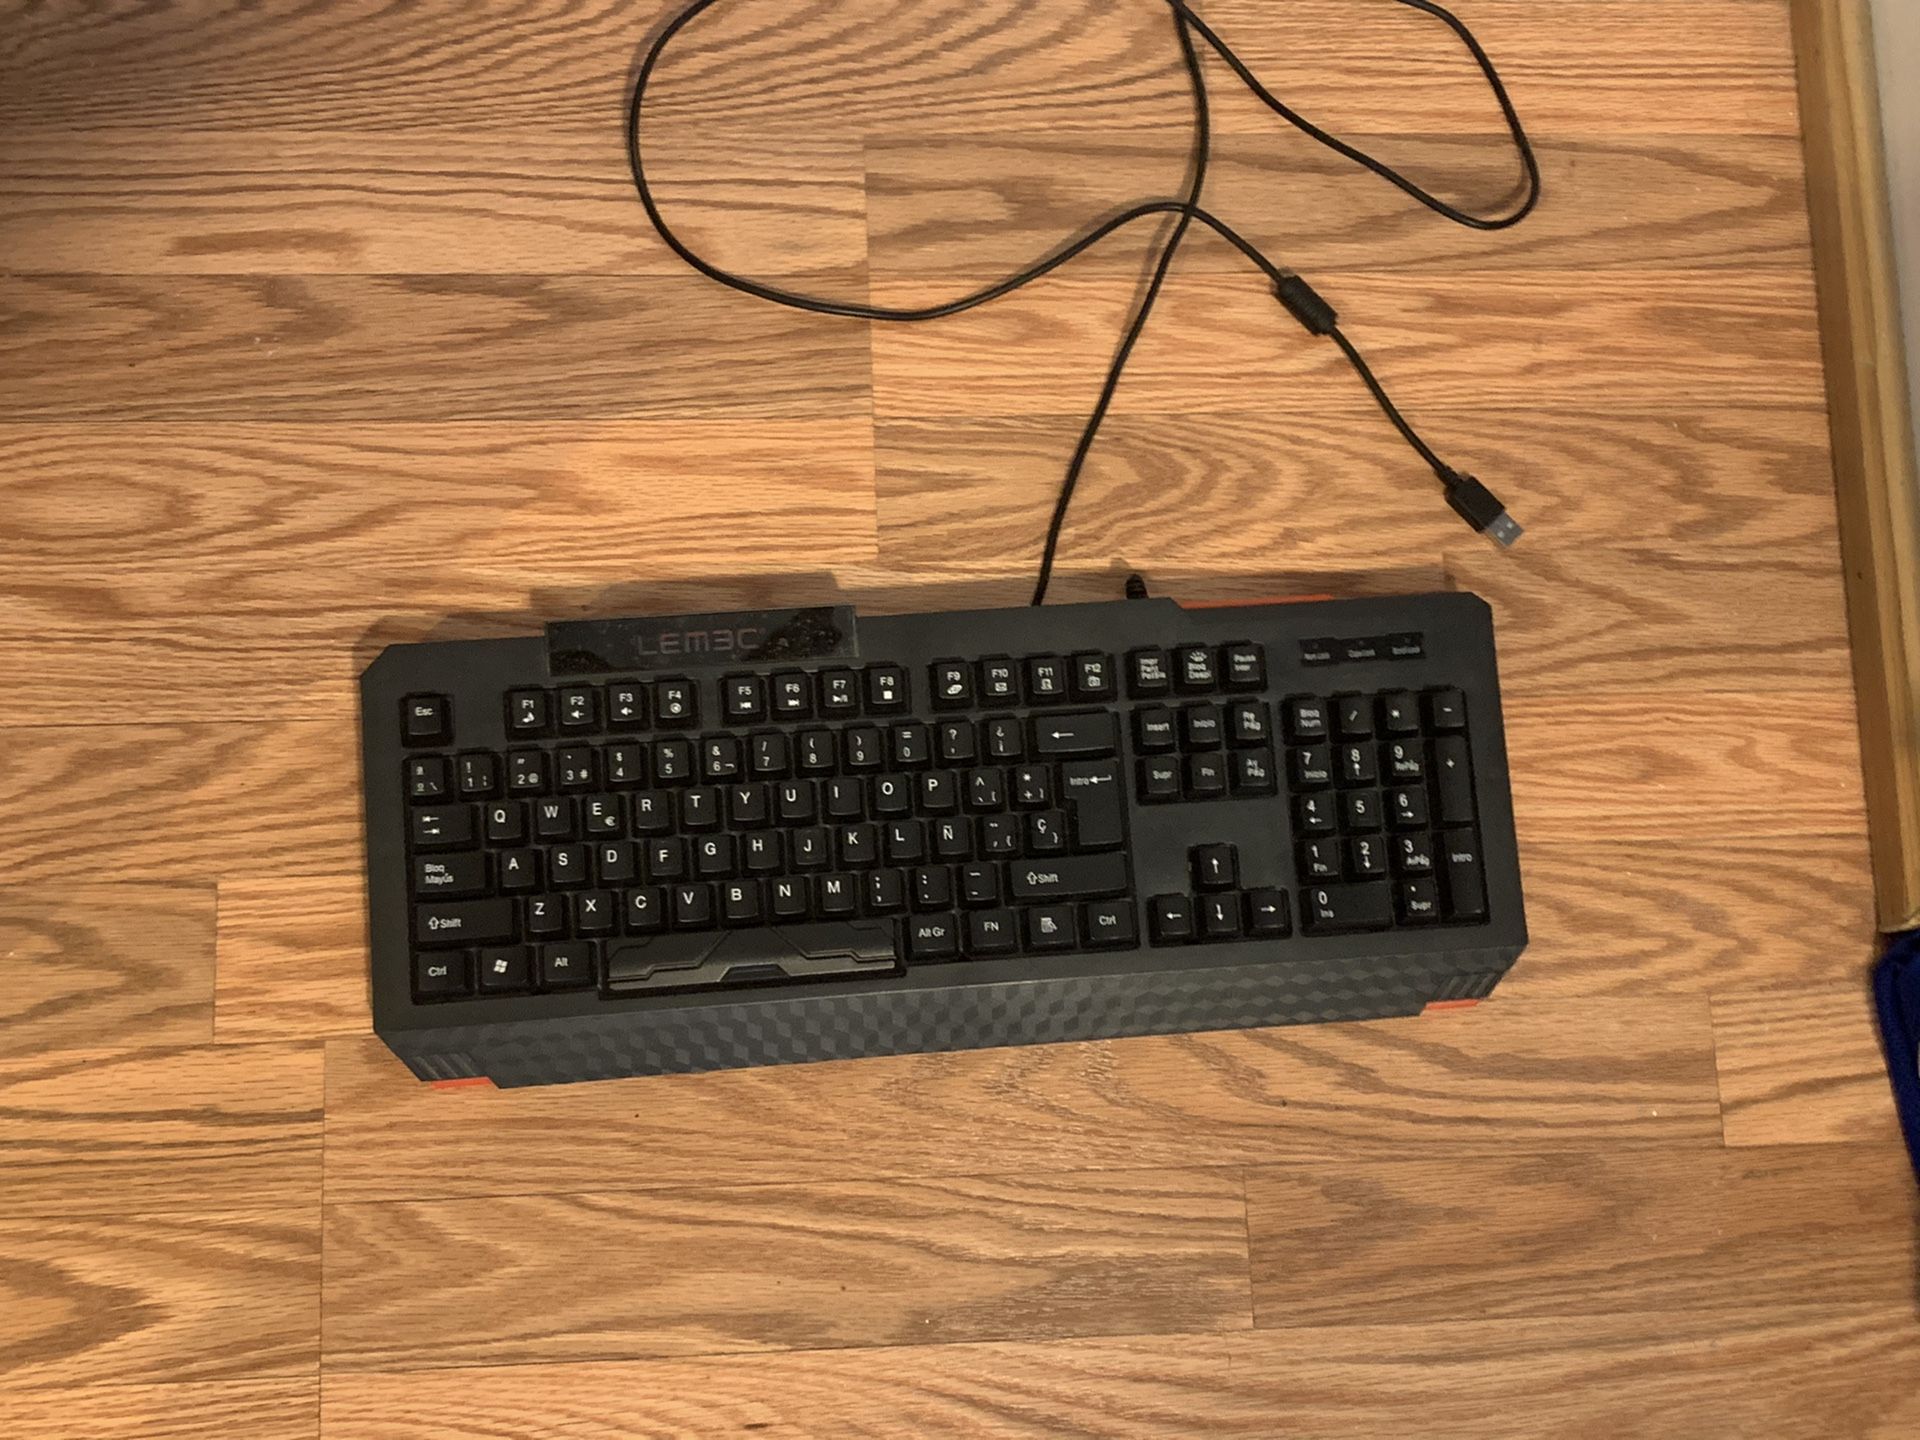 Lemec Keyboard